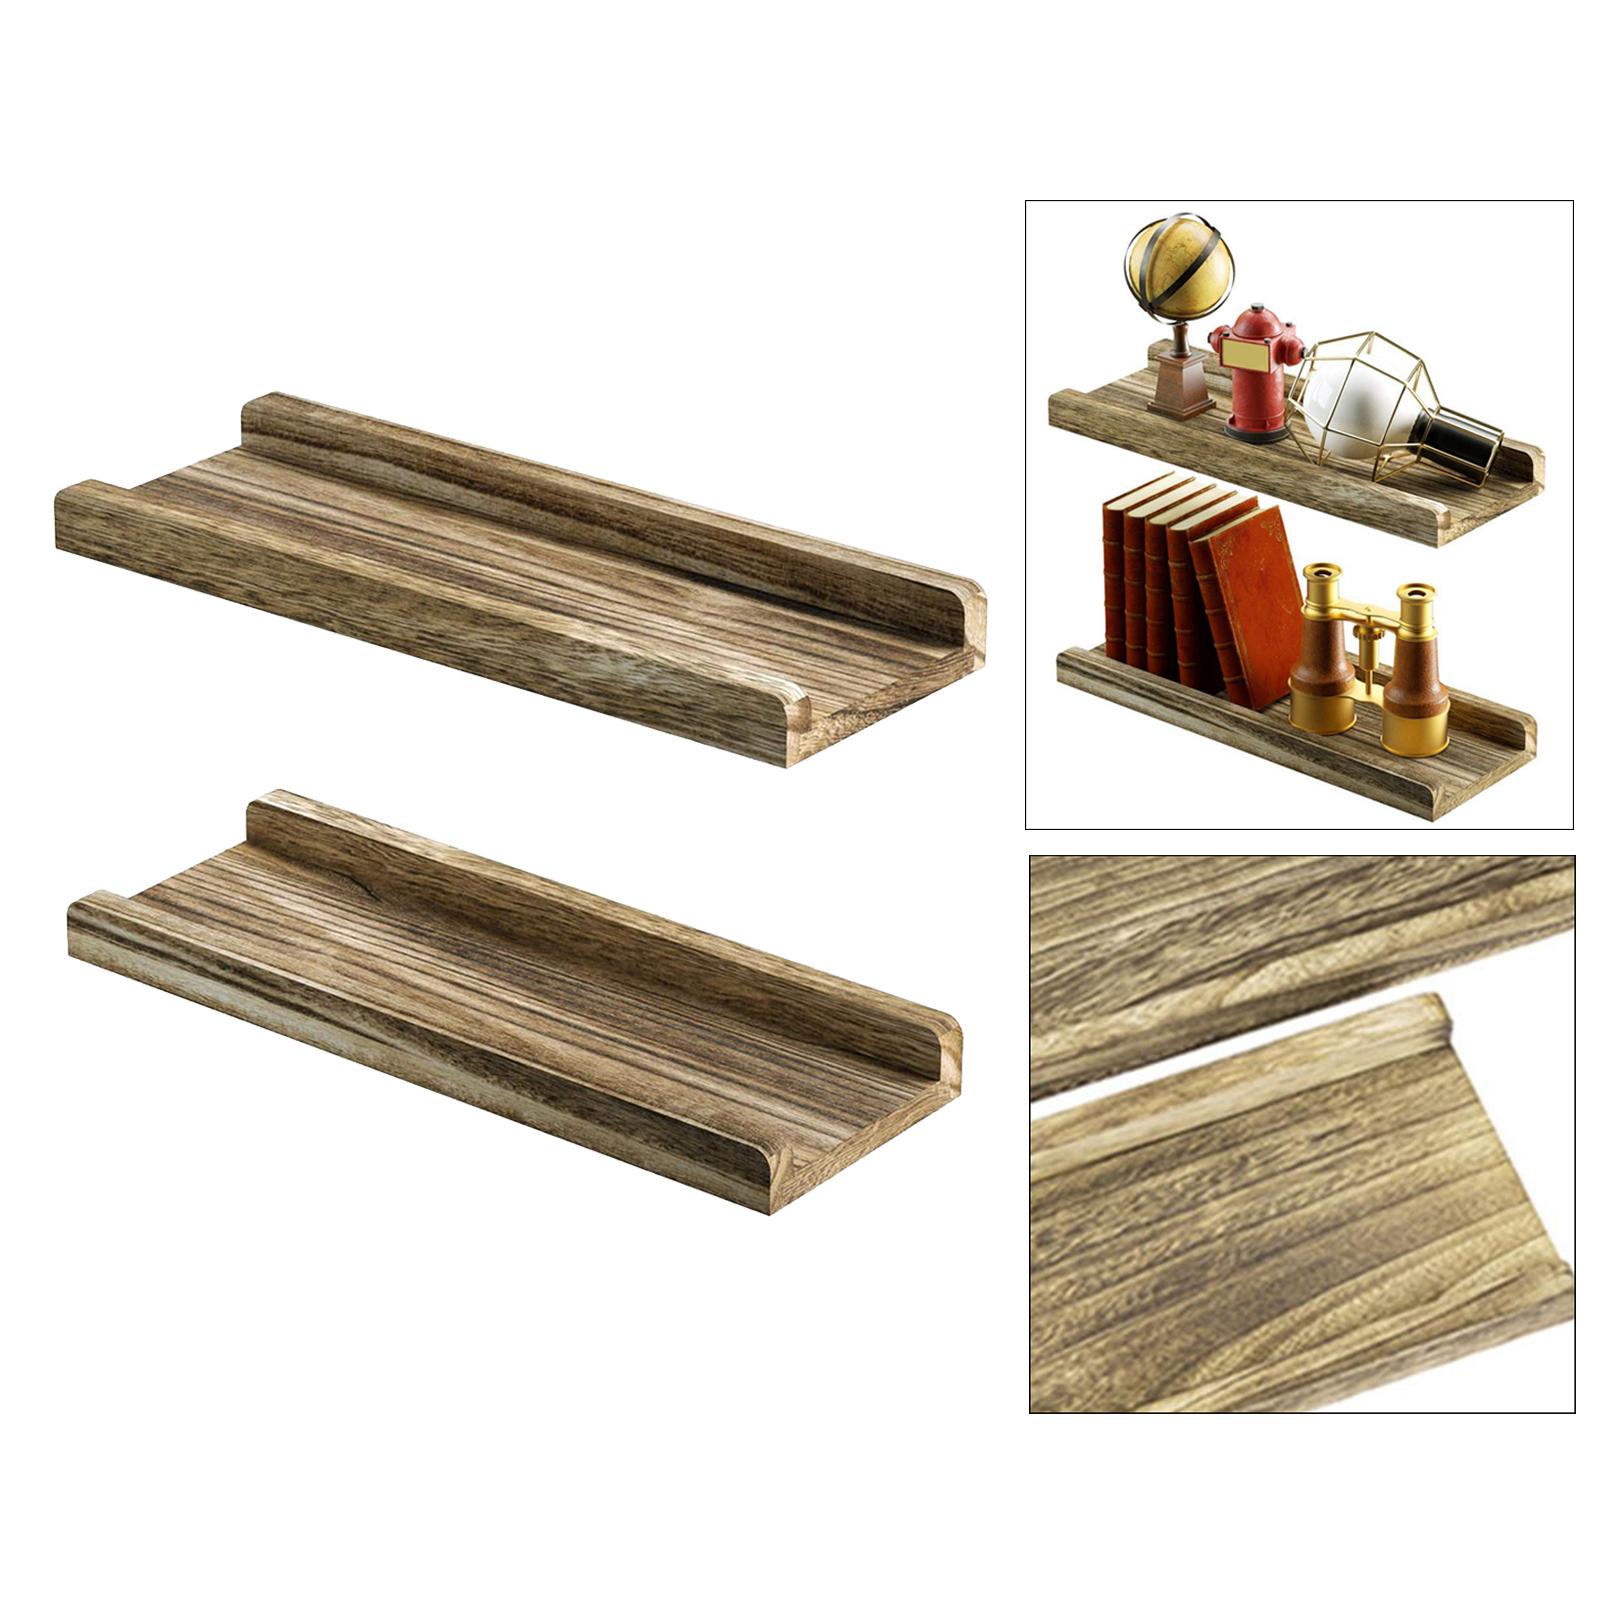 2pcs Rustic Floating Shelves Solid Wooden Shelf Handmade for Bathroom Accs